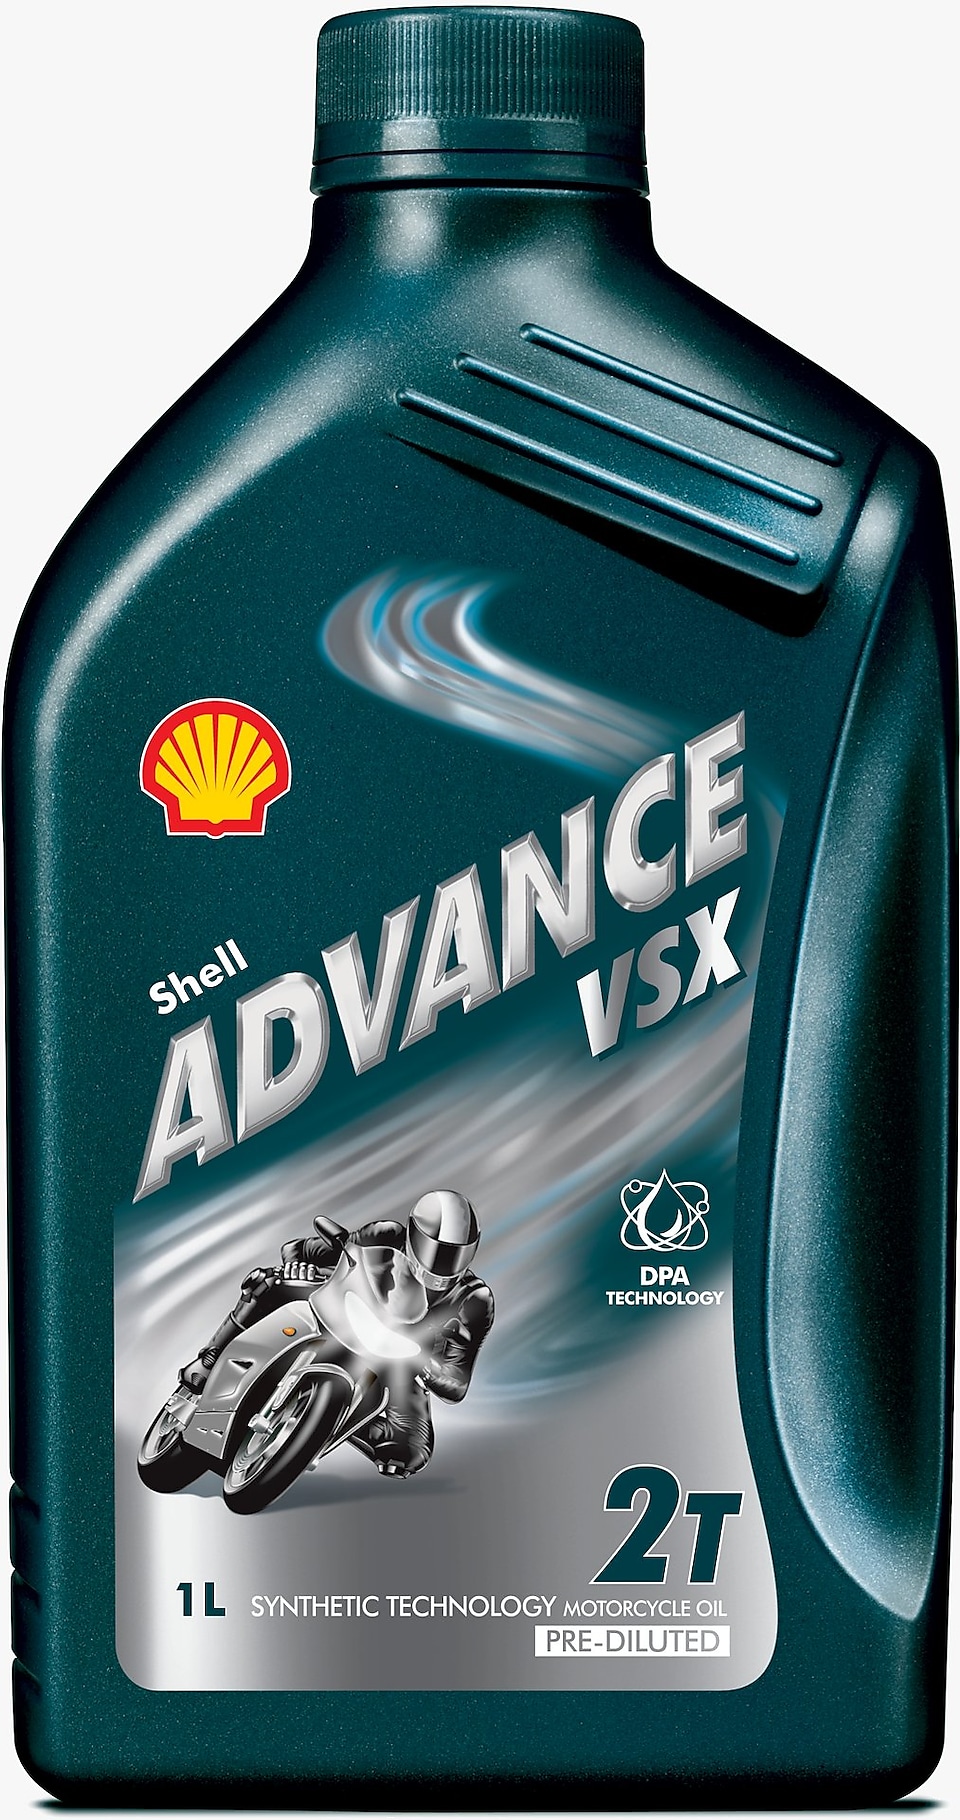 Verpackungsfoto Shell Advance VSX 2